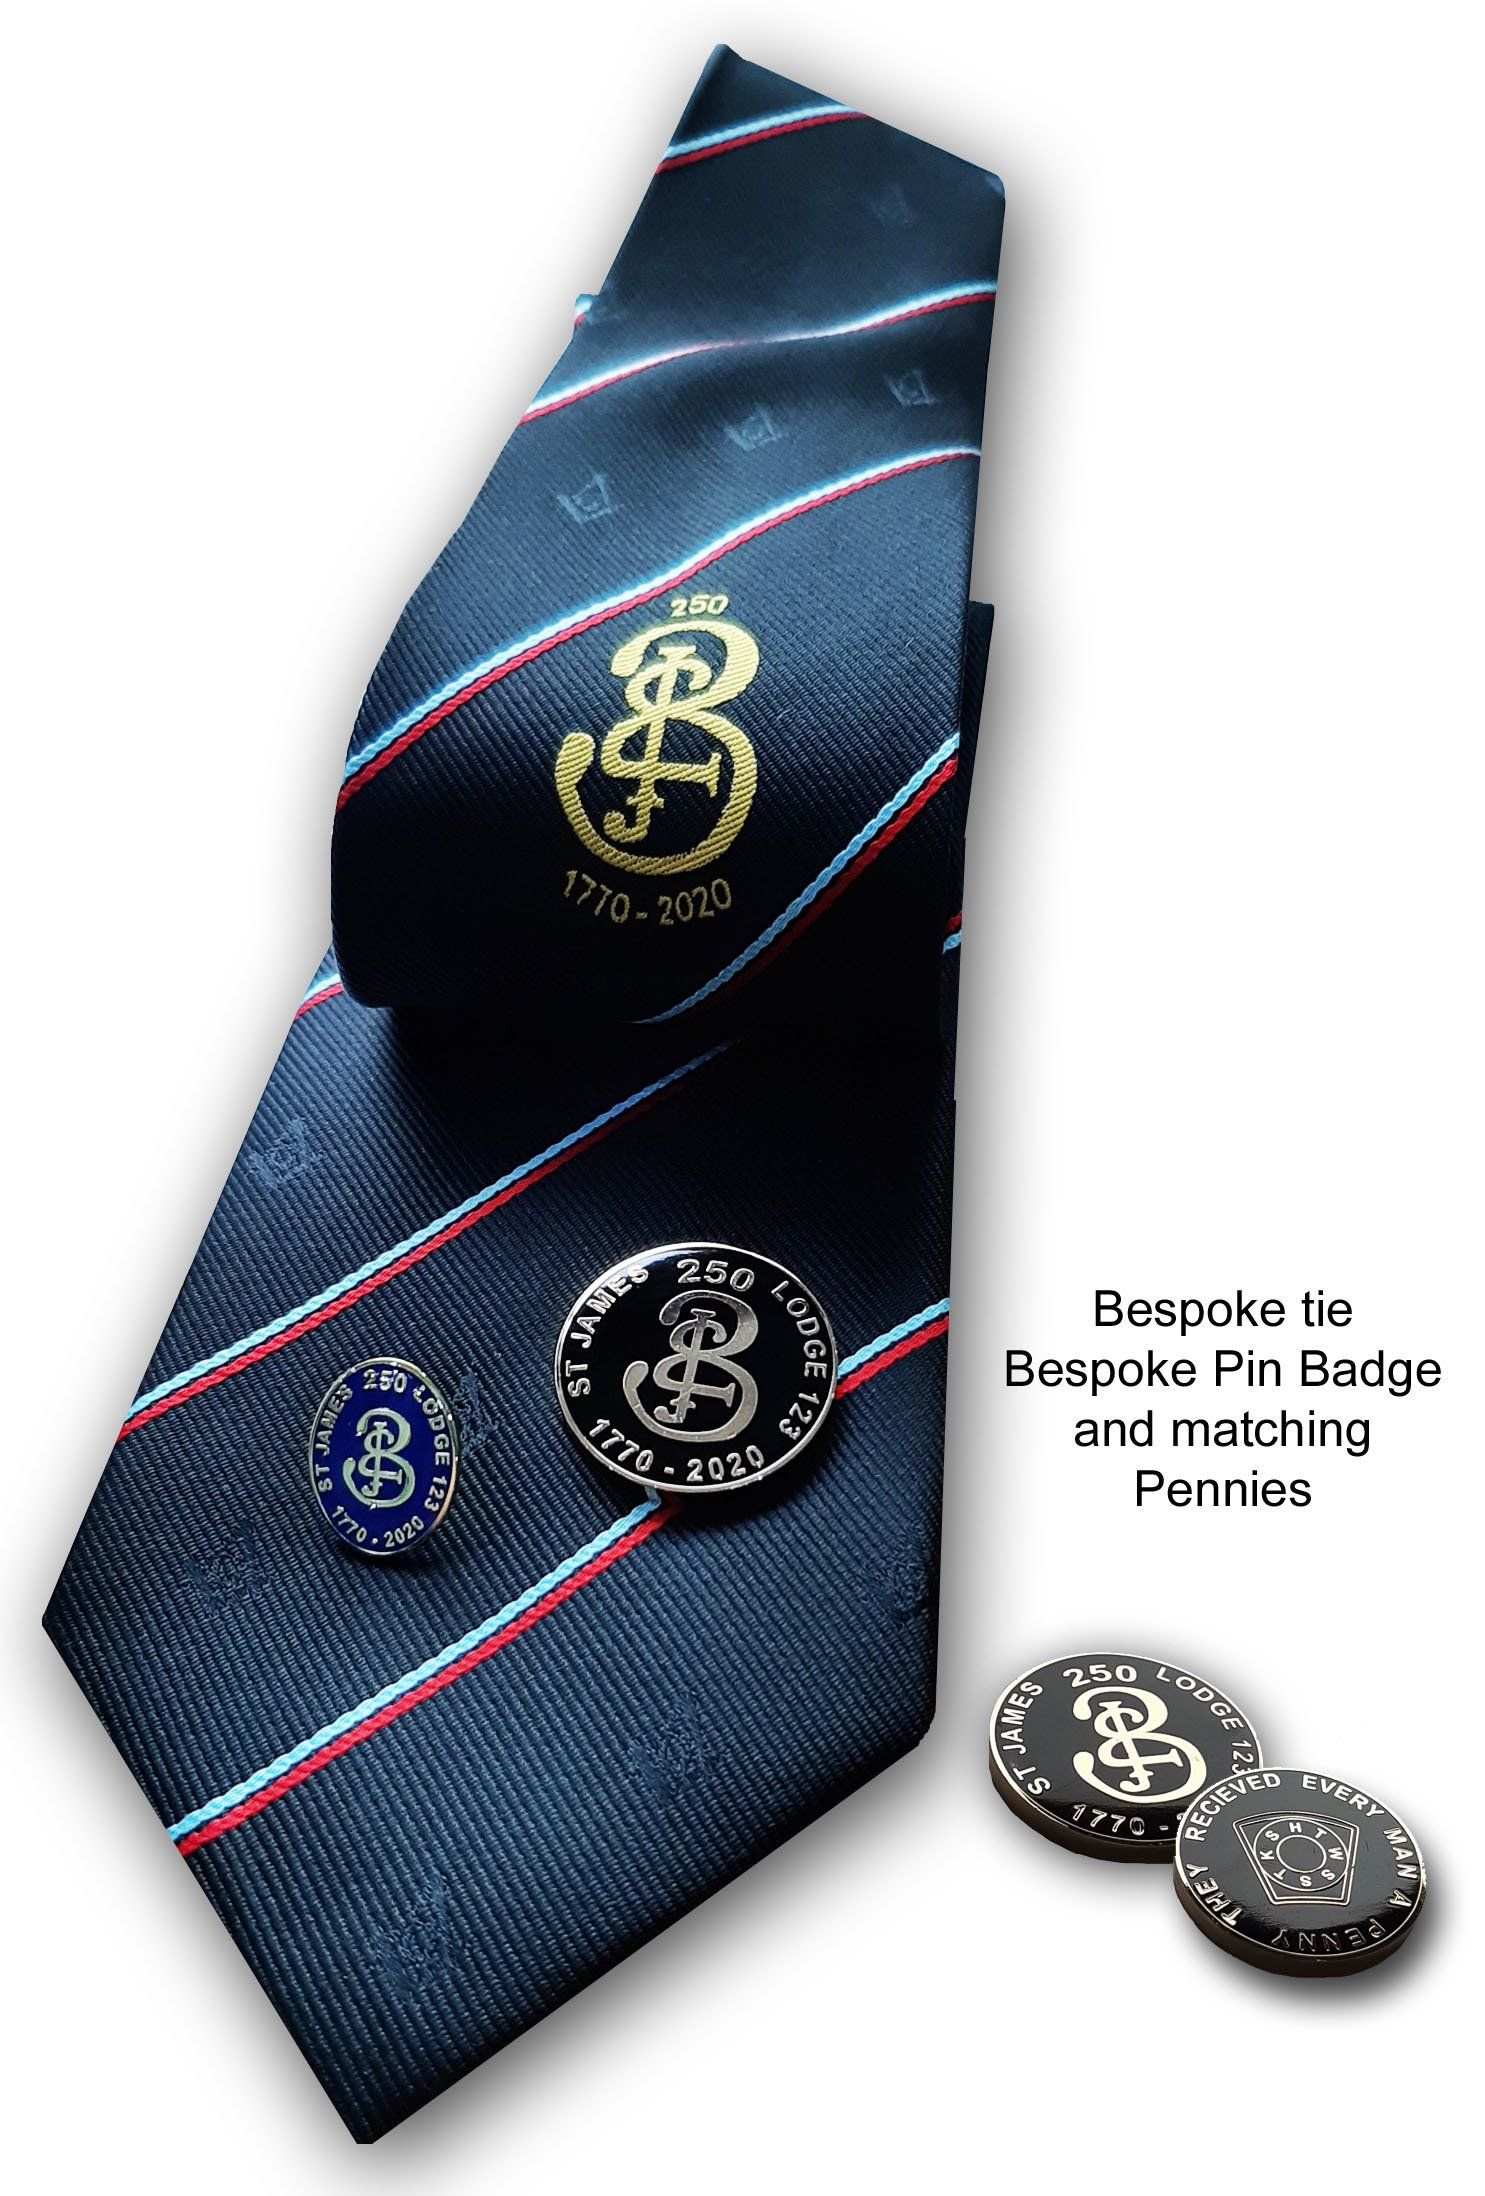 Masonic ties and pennies